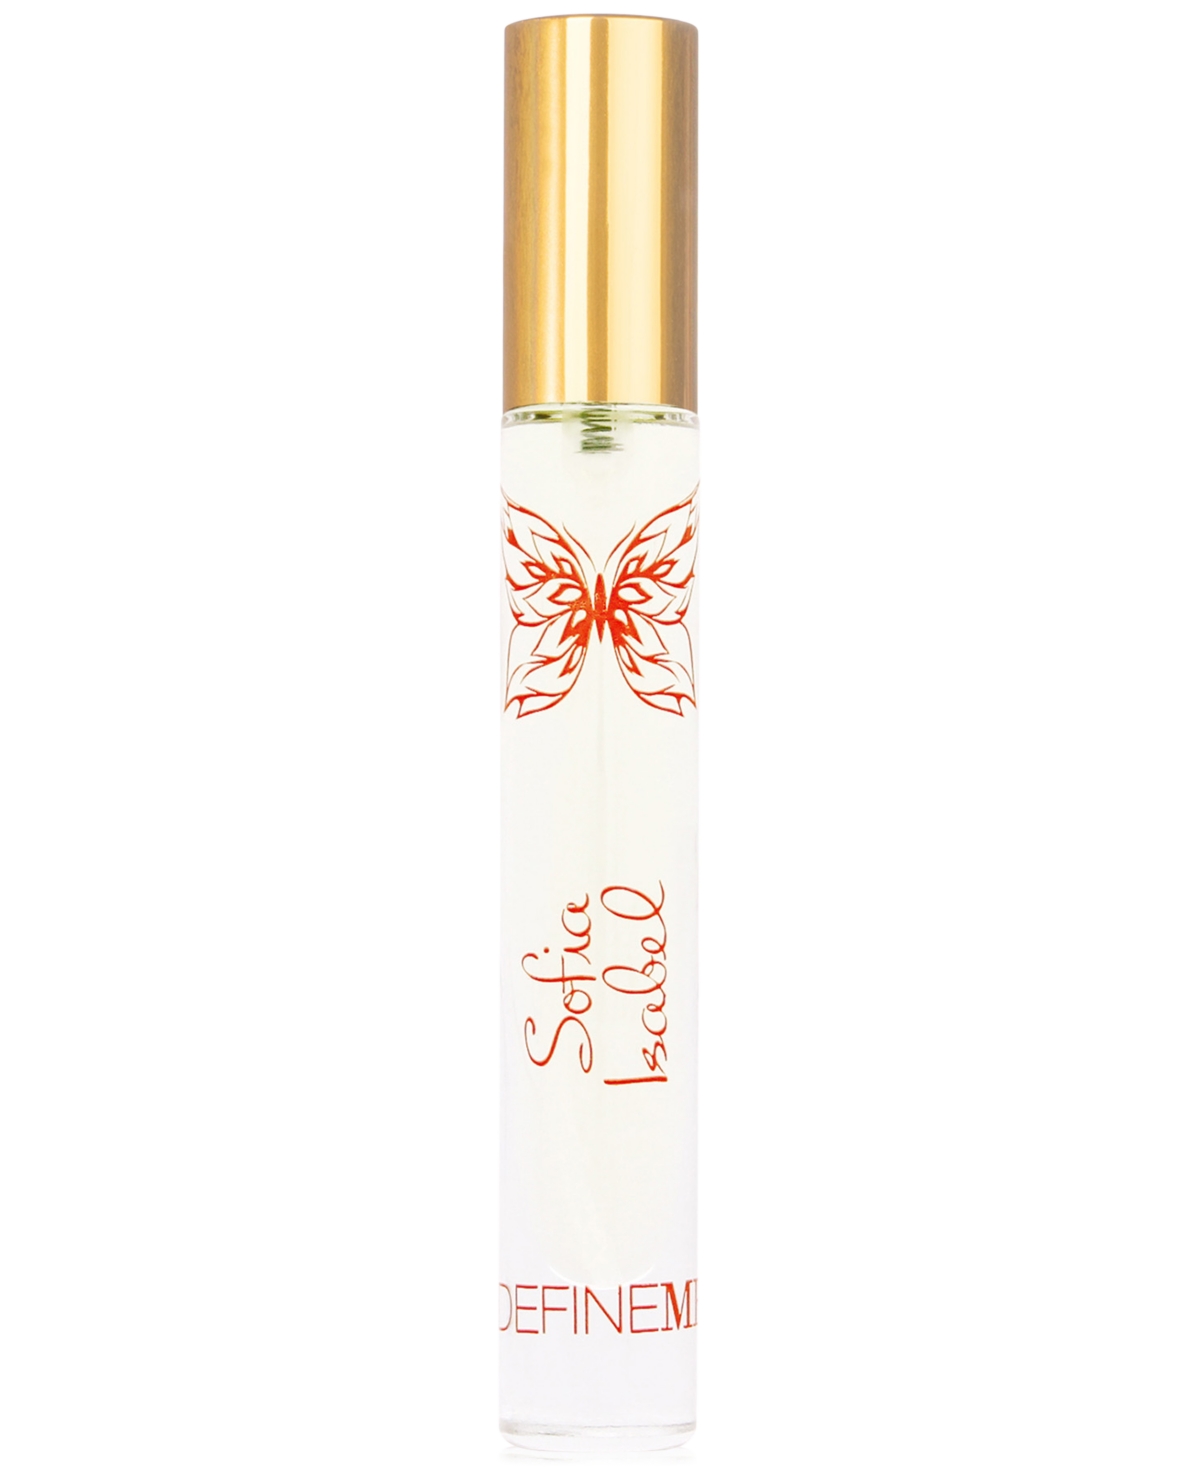 DefineMe Sofia Isabel 'On The Go' Natural Perfume Mist - 0.30 oz